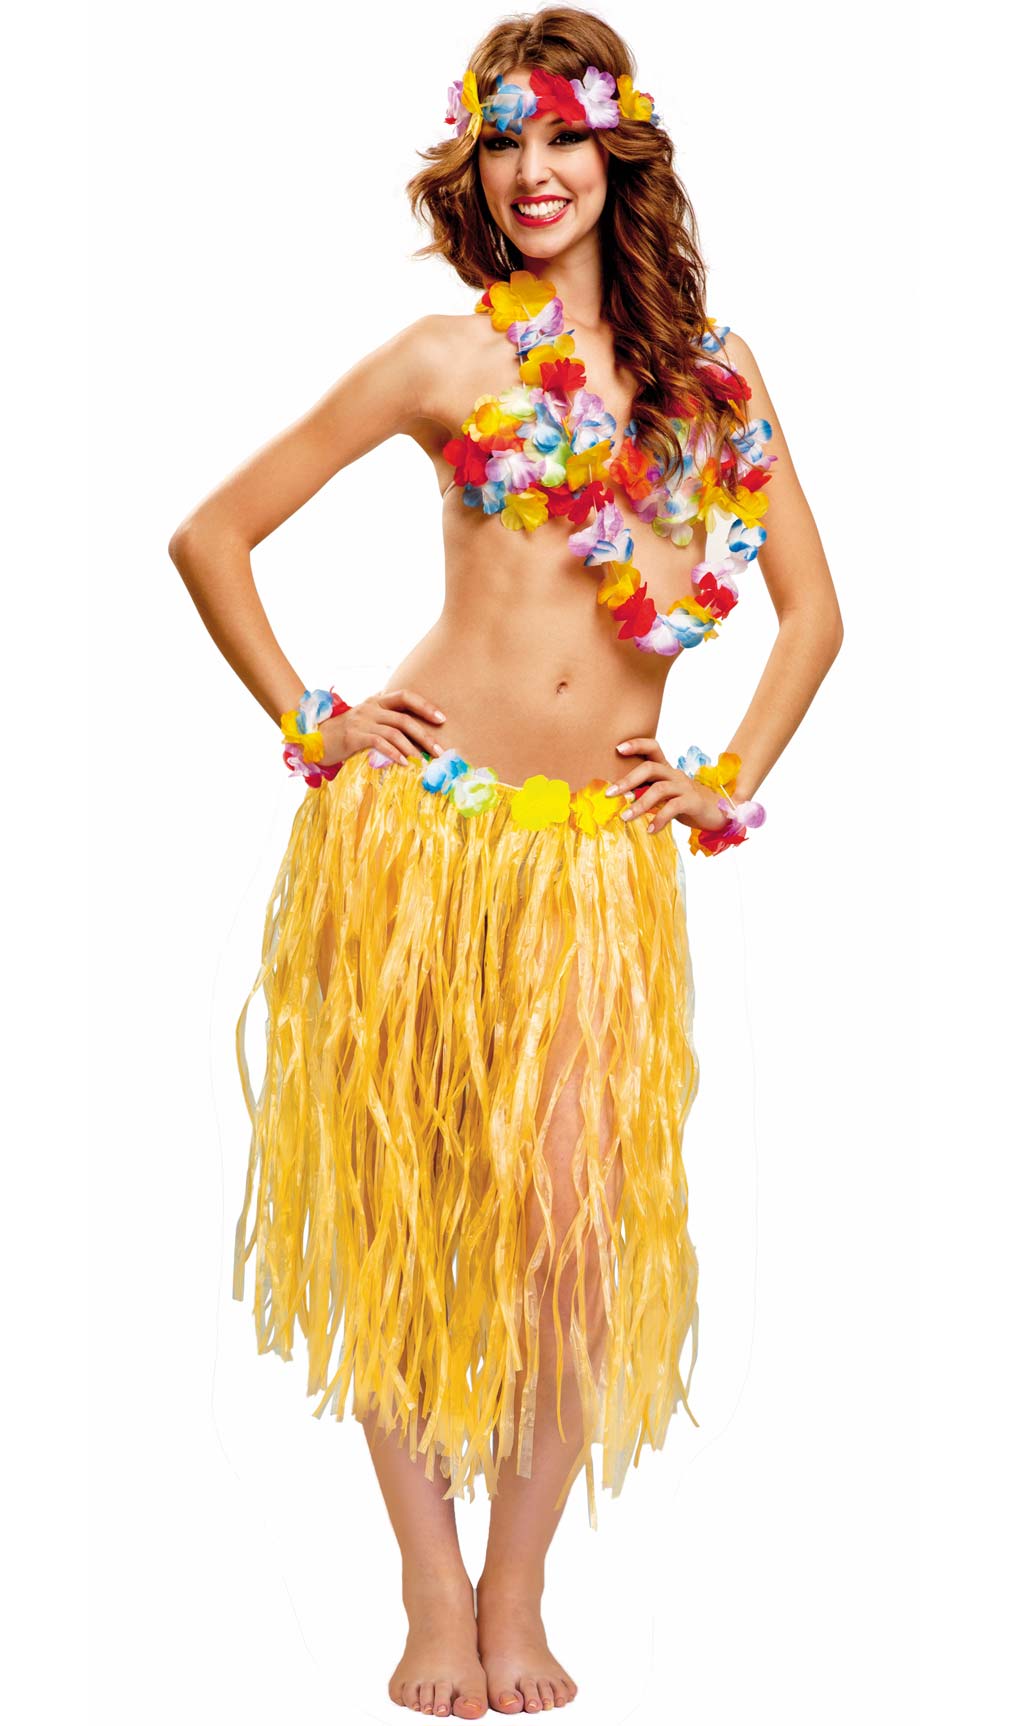 Disfraz de Hawaiana Aloha para mujer online